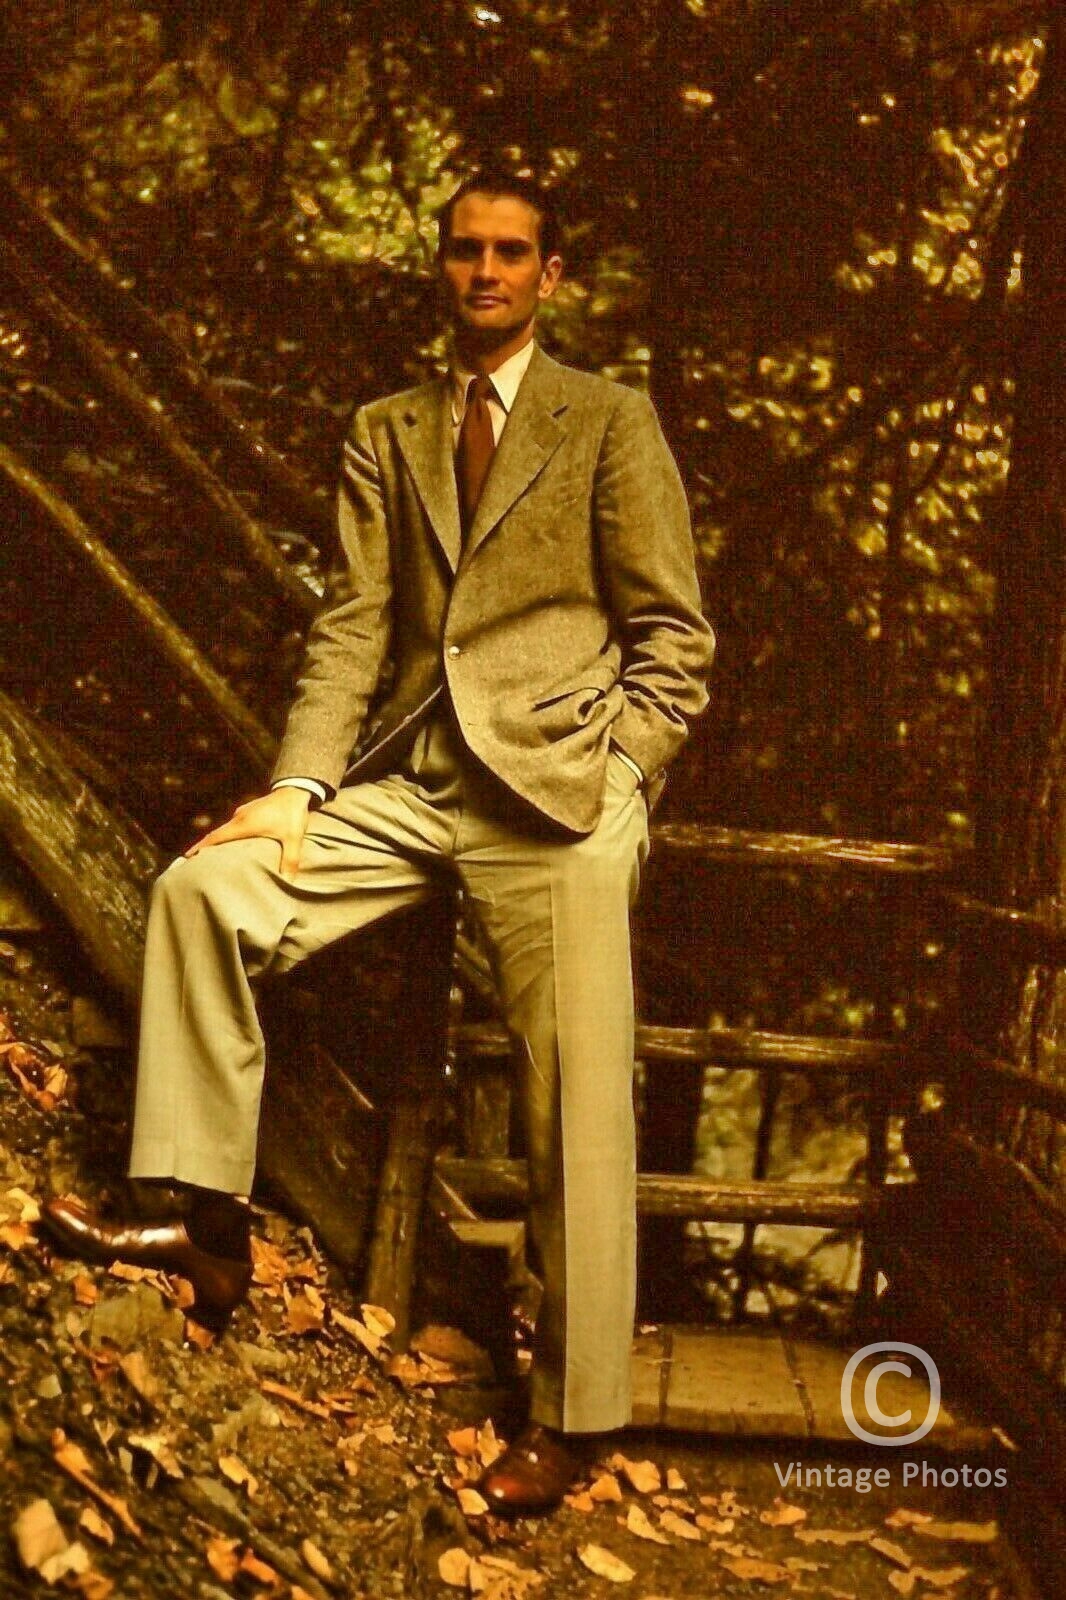 1950s American Fashion - Man in Jacket